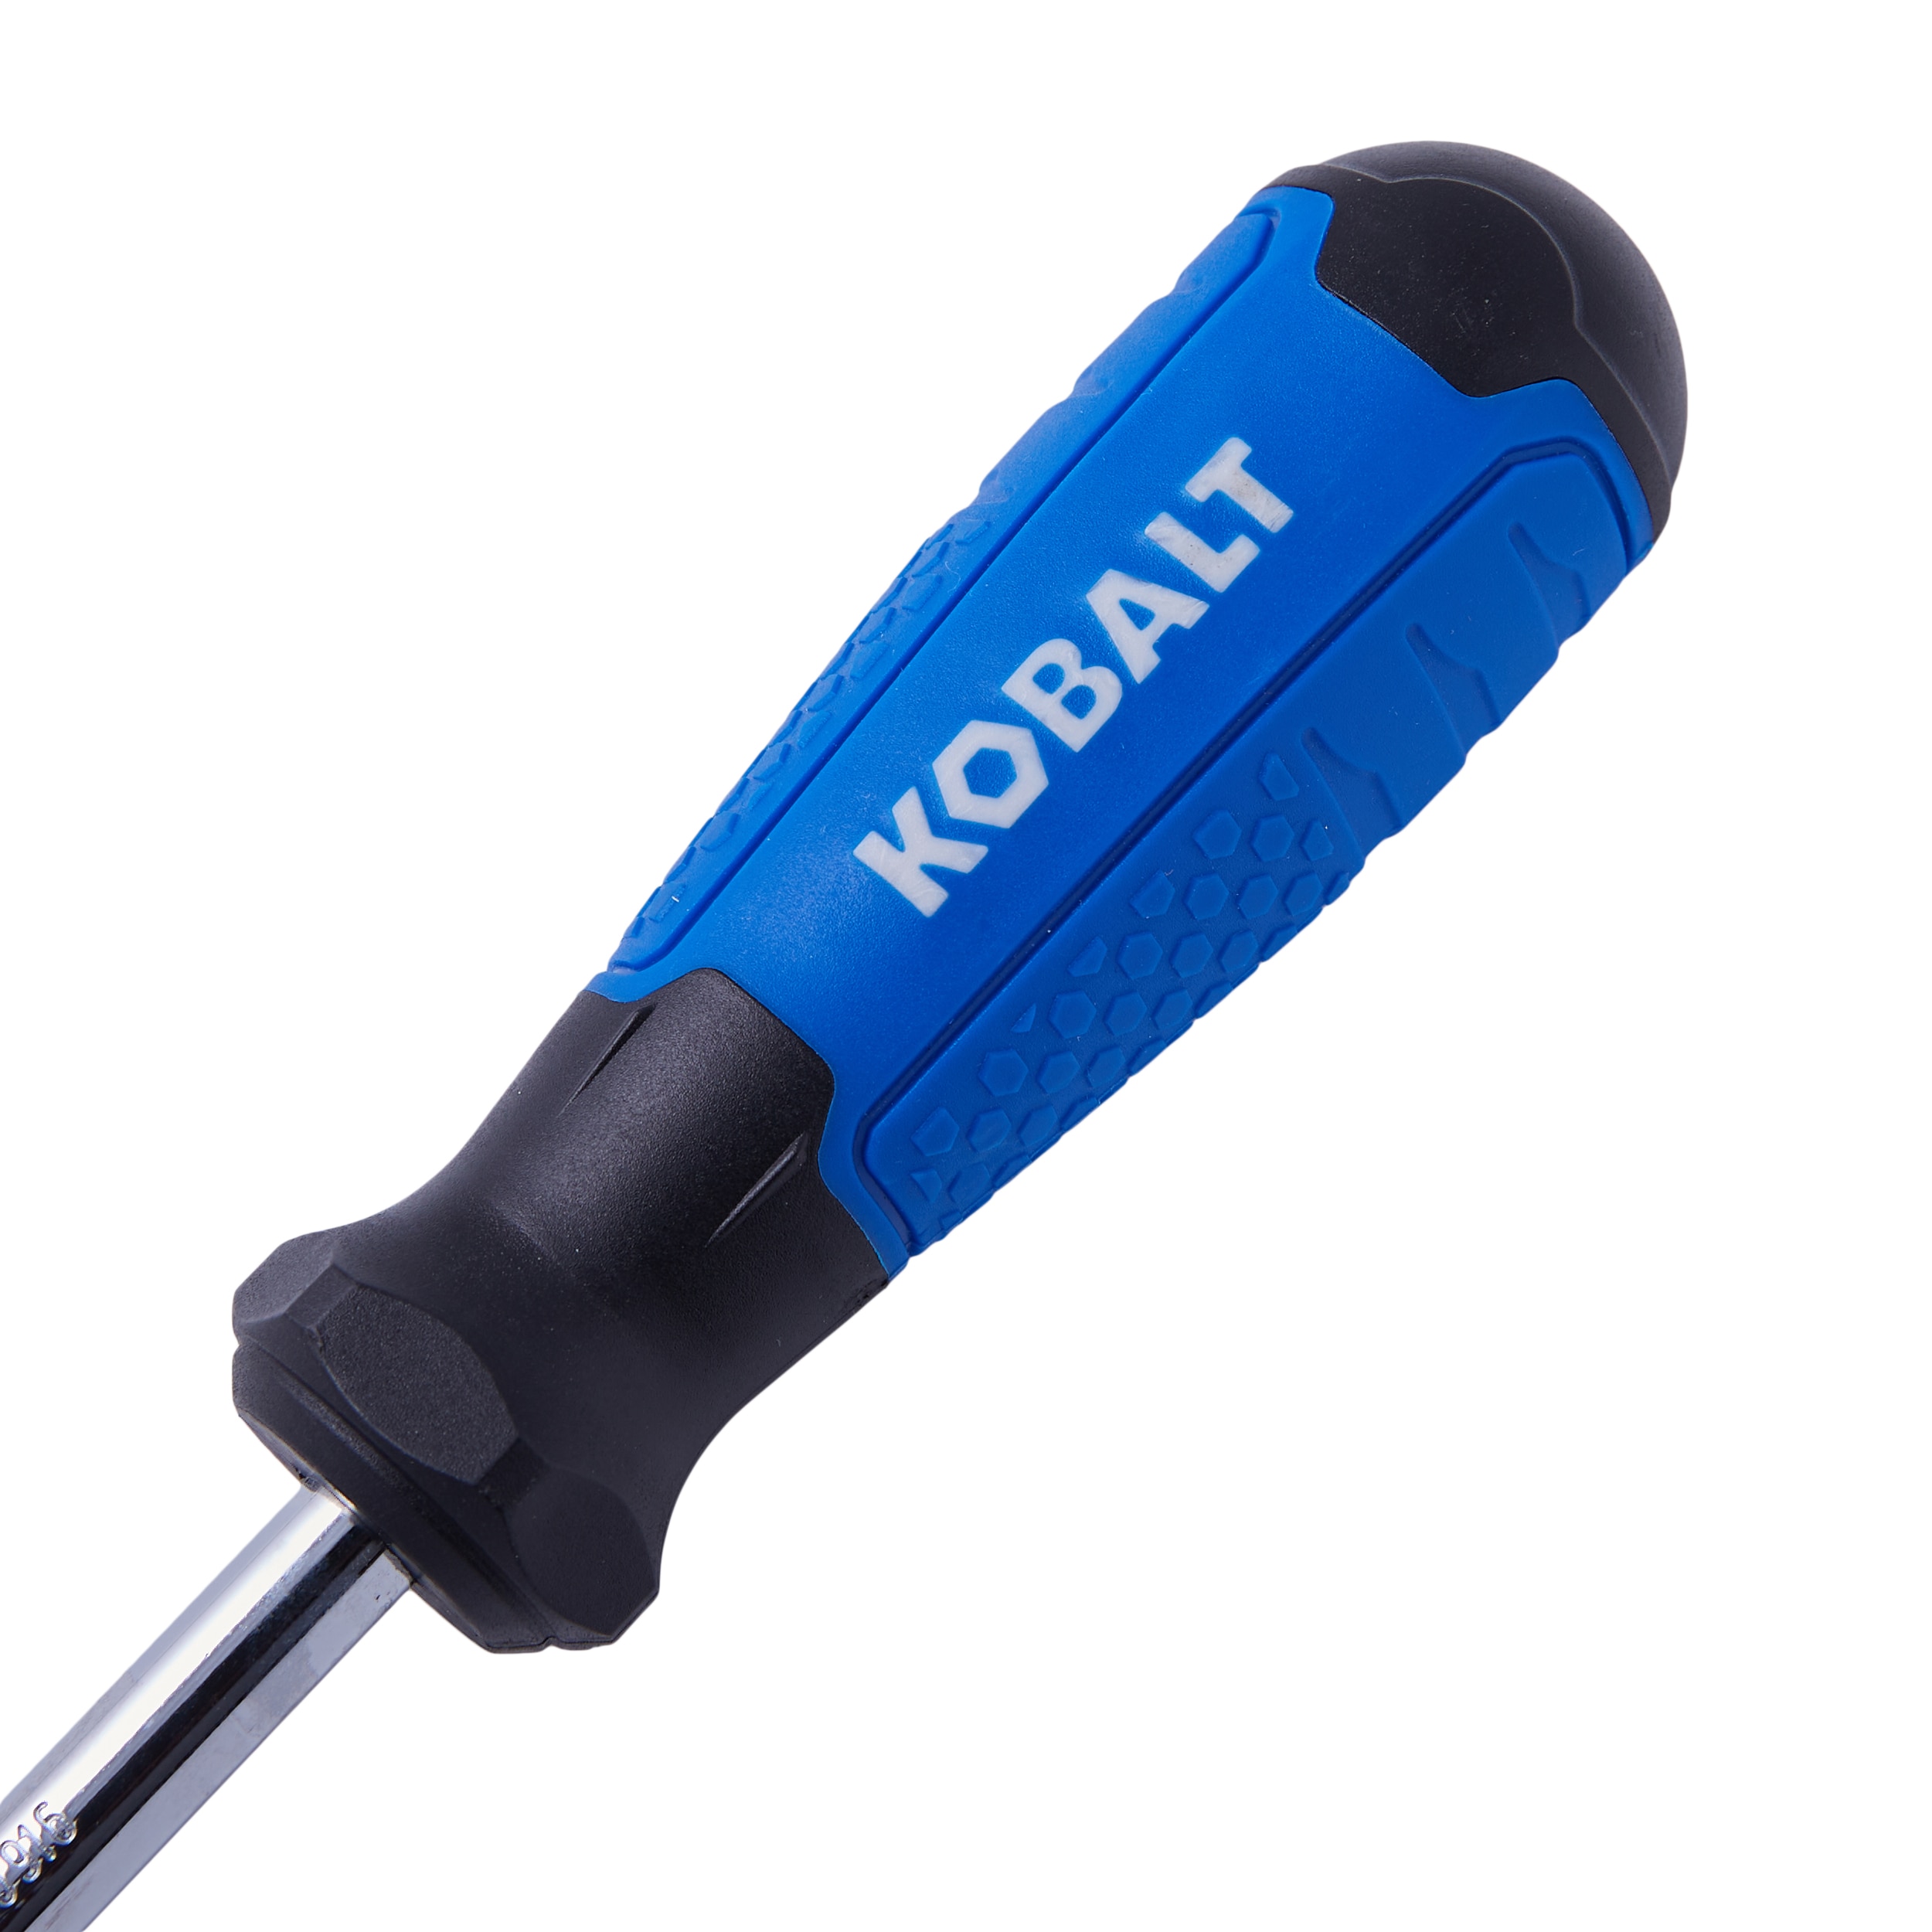 Kobalt 5/16-in; 8-mm x 7-in Spline Nut Driver at Lowes.com